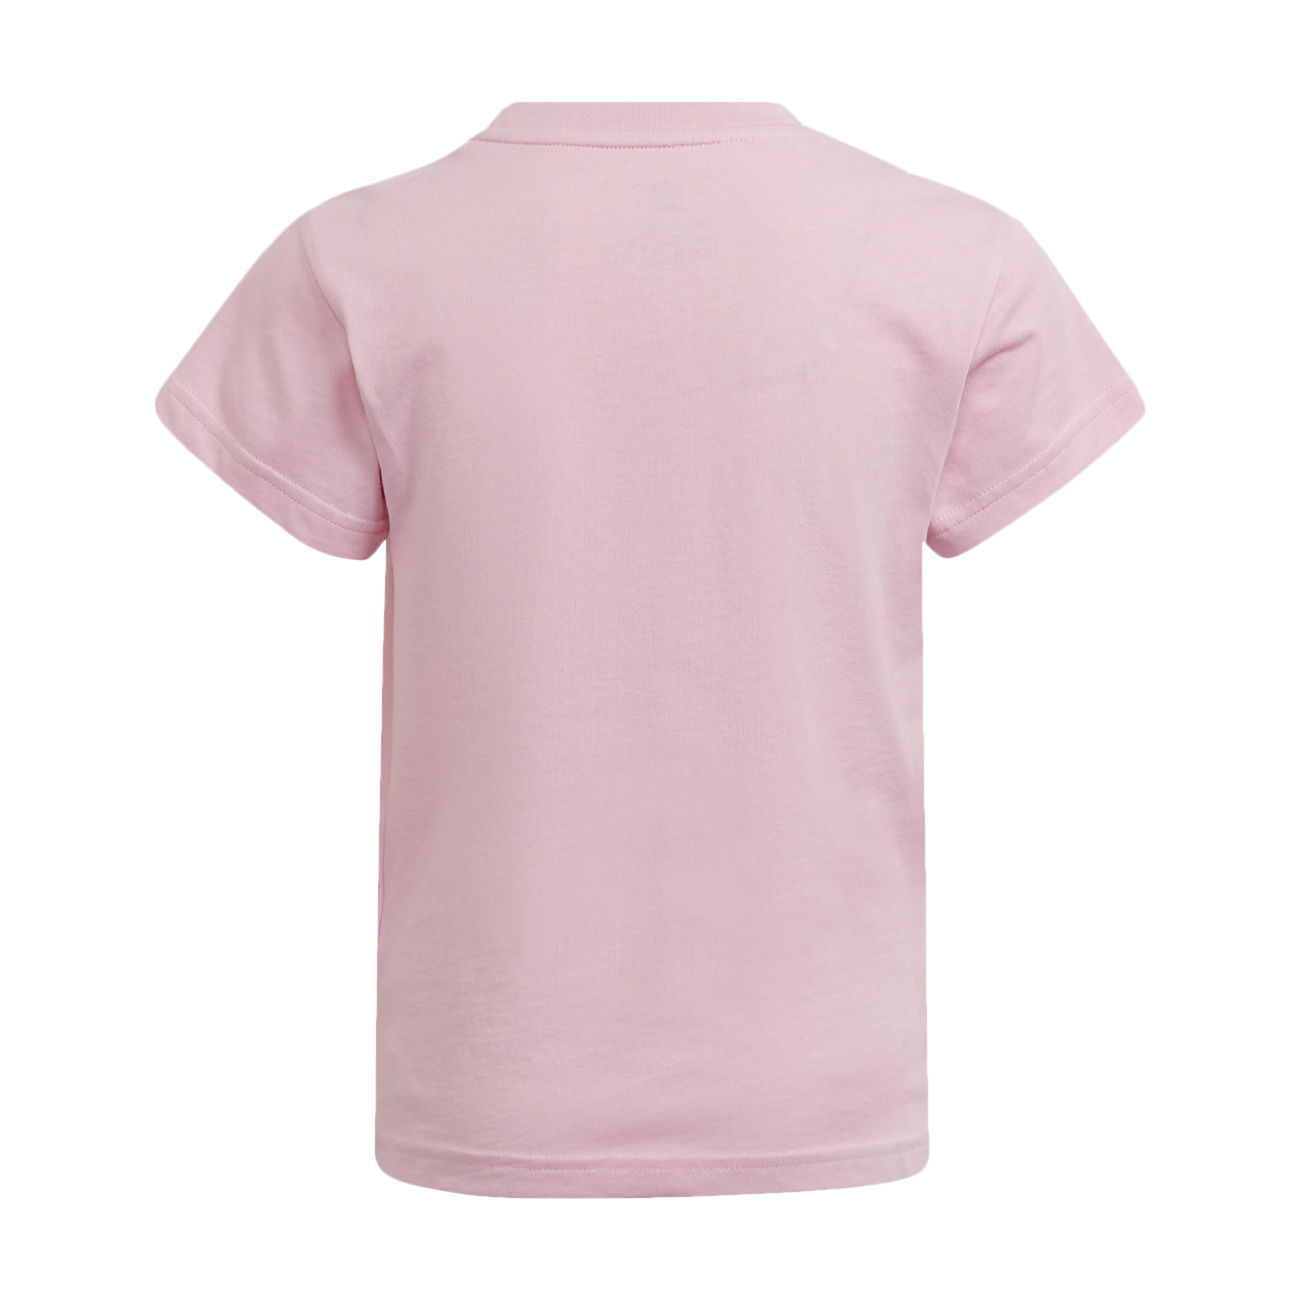 ADIDAS T-SHIRT ADICOLOR TREFOIL Girl True Pink White | Mascheroni Store